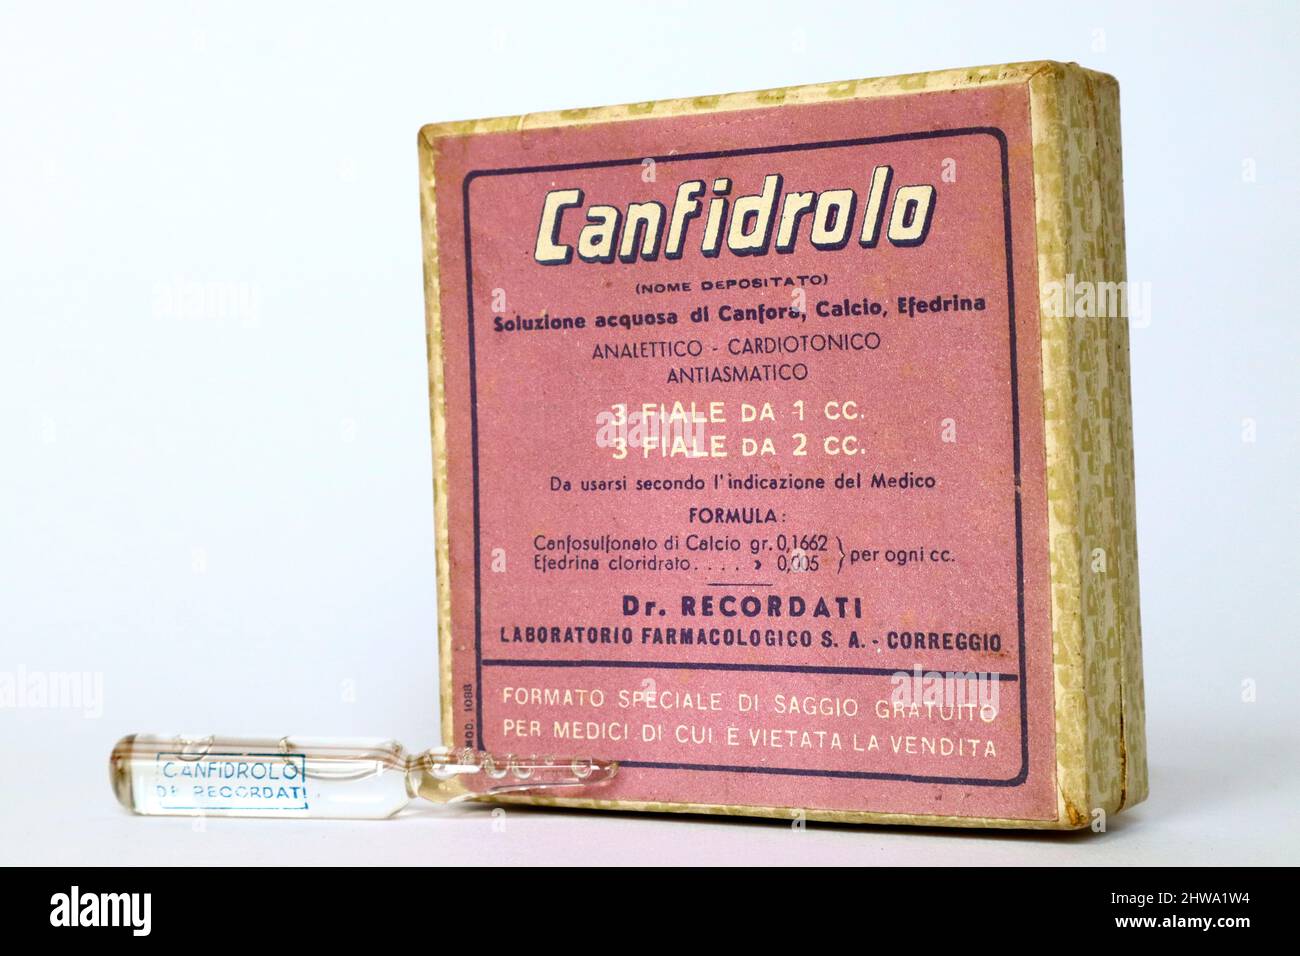 Vintage 1940s CANFIDROLO vials box medicine with Ephedrine for analeptic,  cardiotonic and antiasthmatic. Dr. RECORDATI S.A. - Correggio (Italy Stock  Photo - Alamy